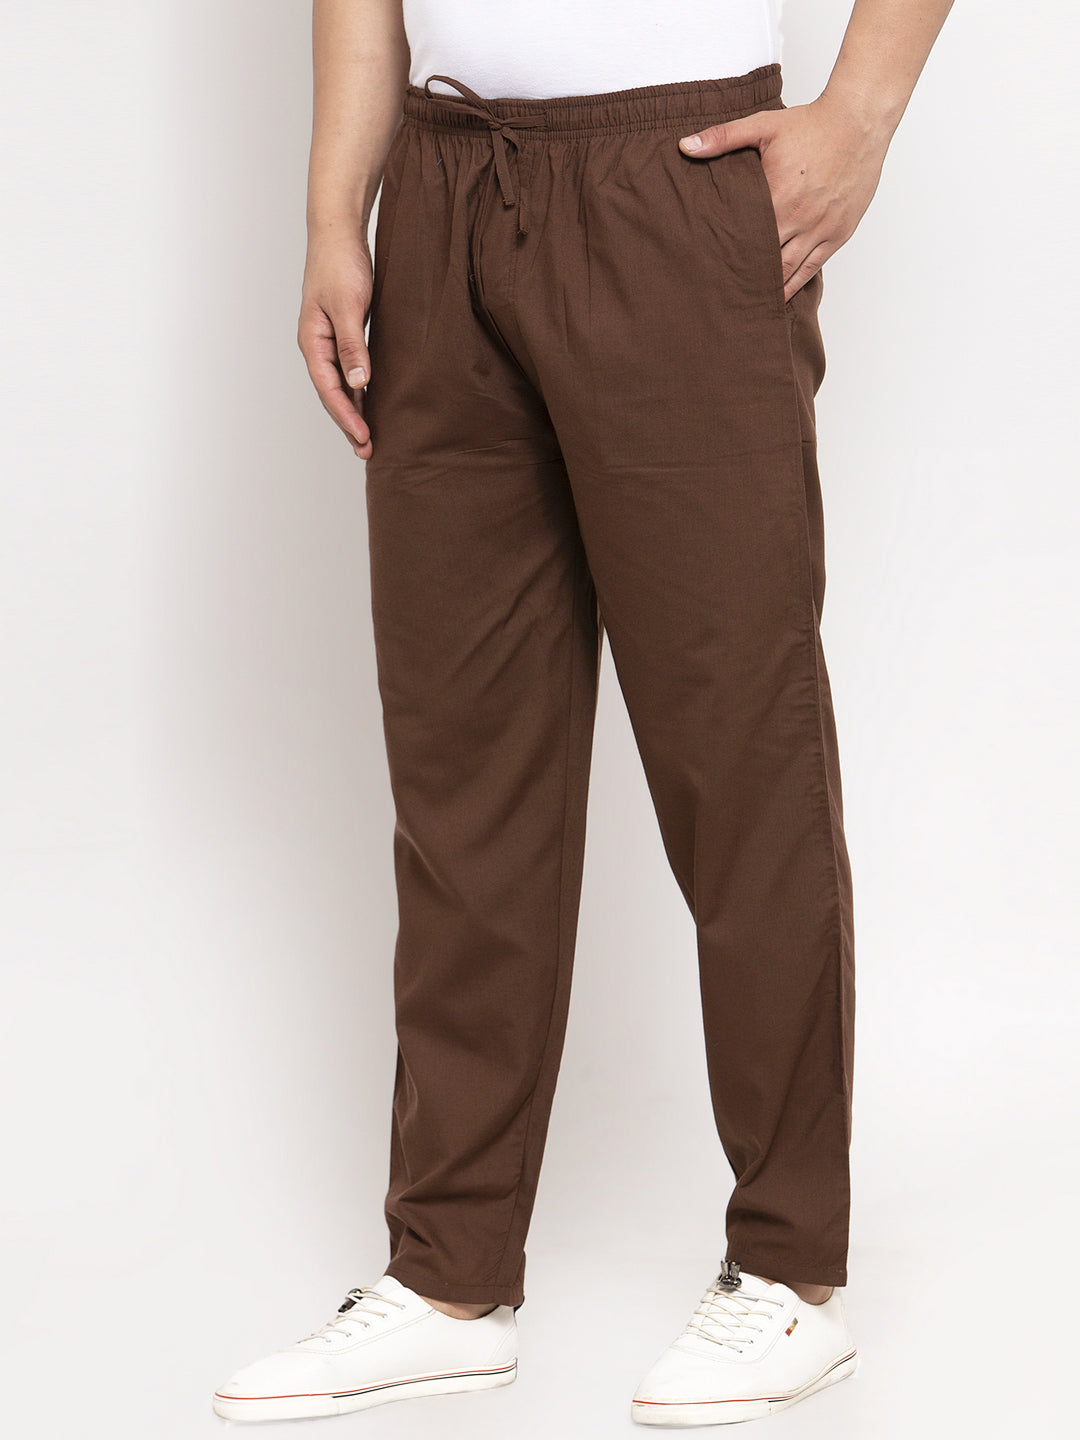 Jainish Men's Brown Solid Cotton Track Pants